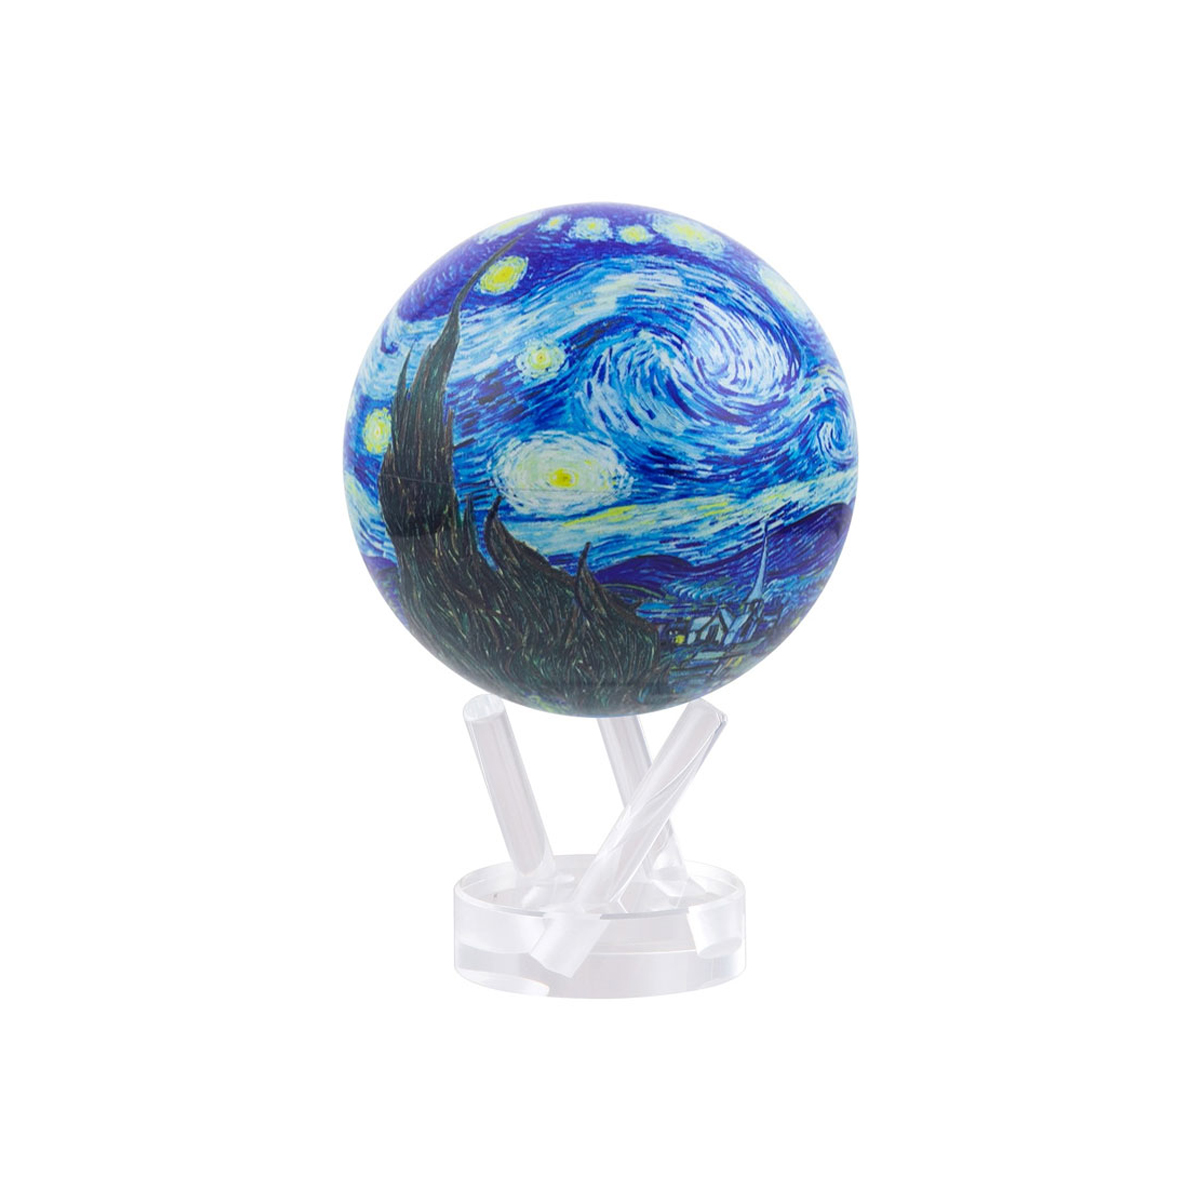 Starry Night 4.5 inch Globe by MOVA